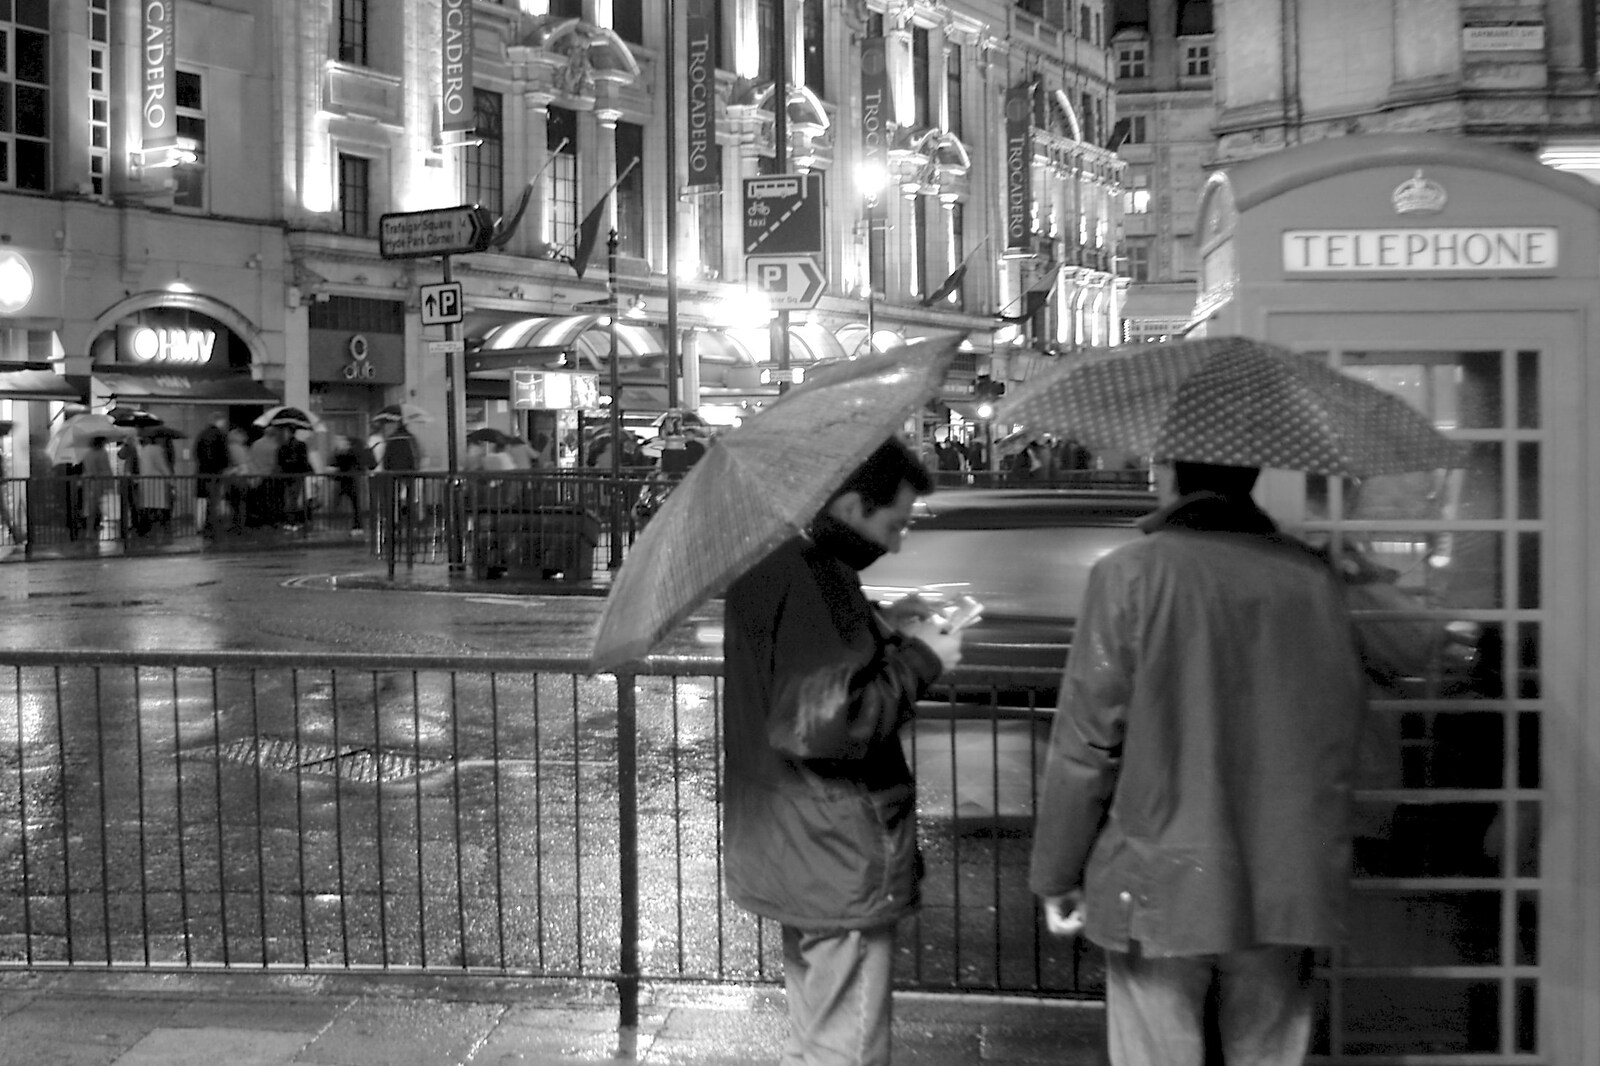 The Trocadero from London in the Rain - 18th November 2004